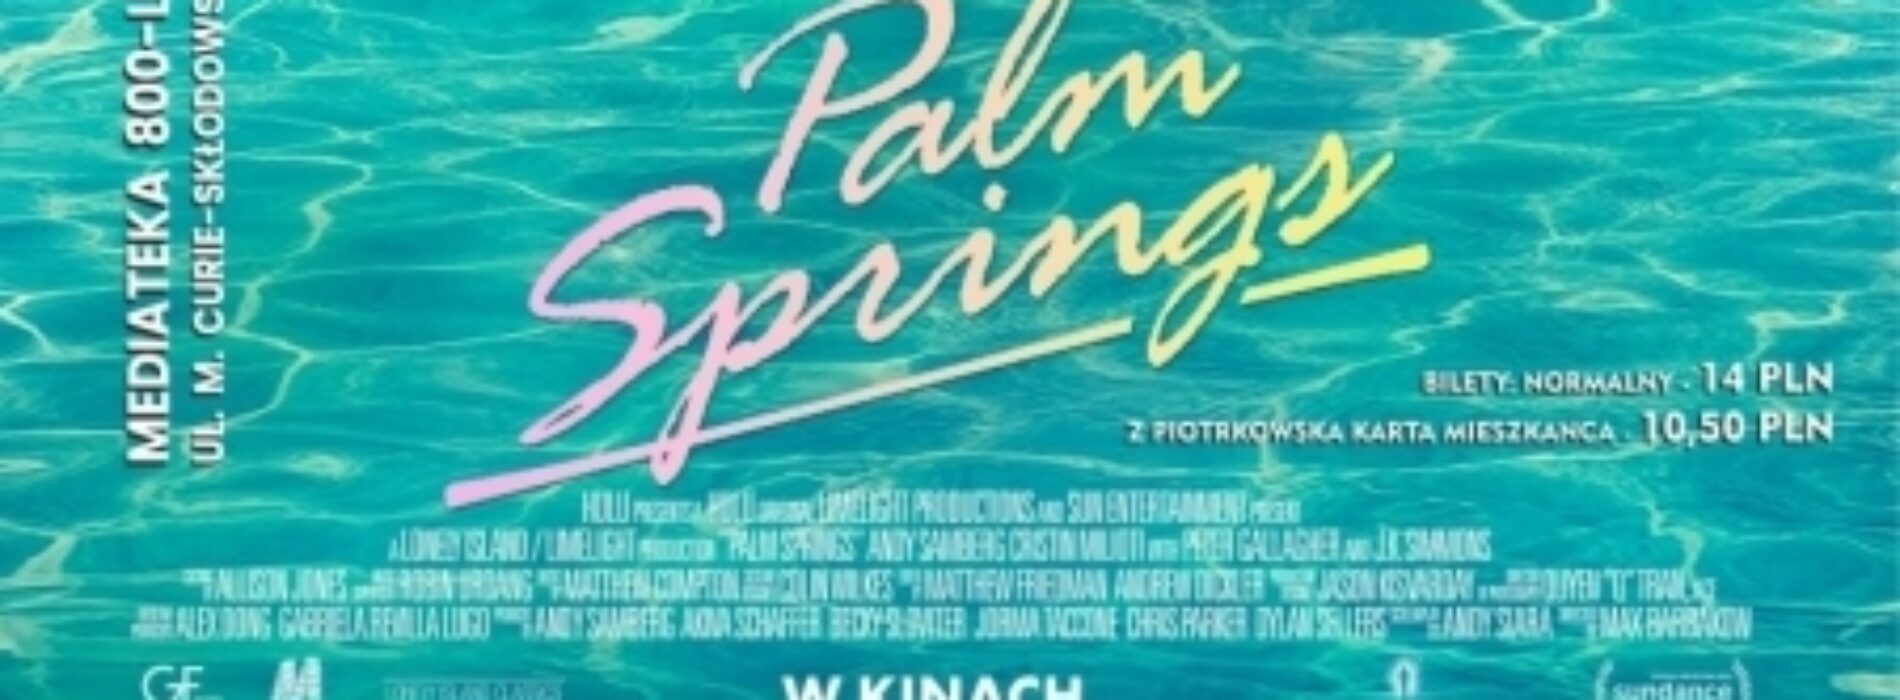 „Palm Springs” w kinie PIKSEL